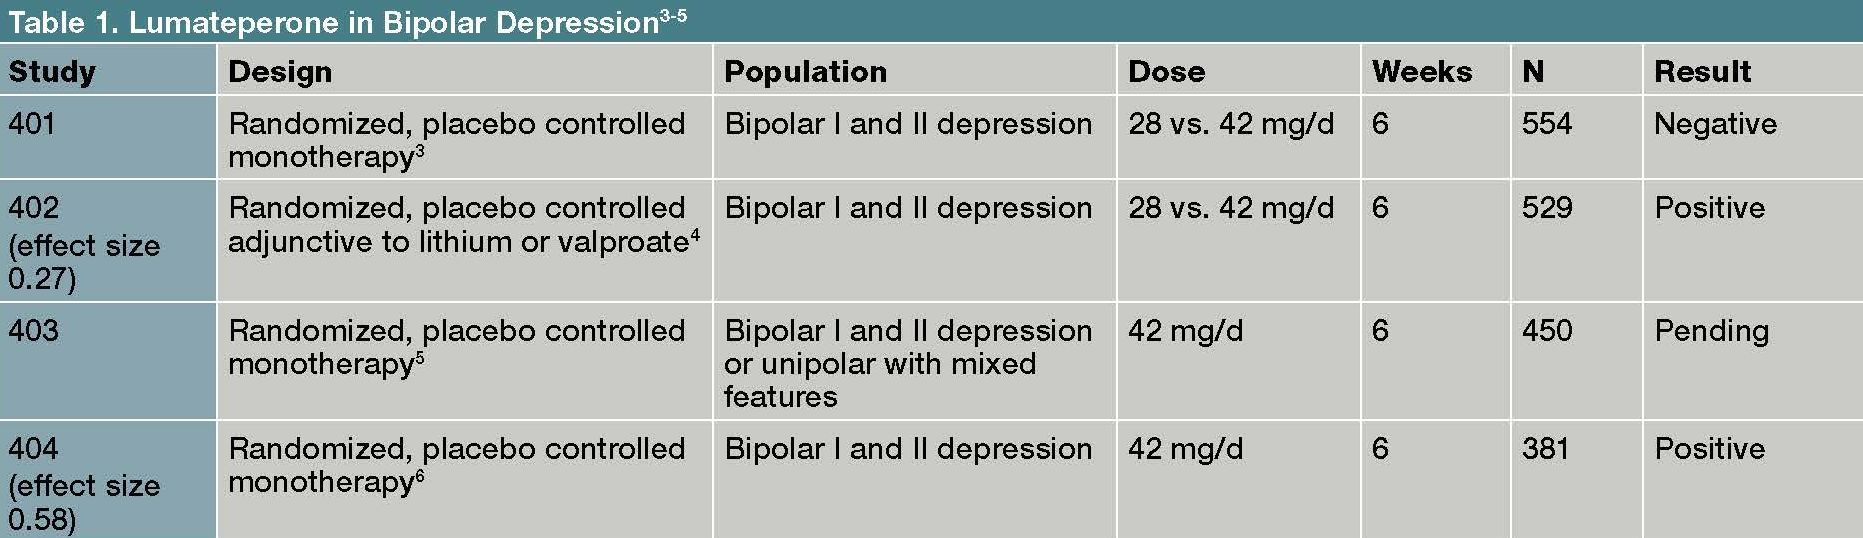 Lumateperone in Bipolar Depression